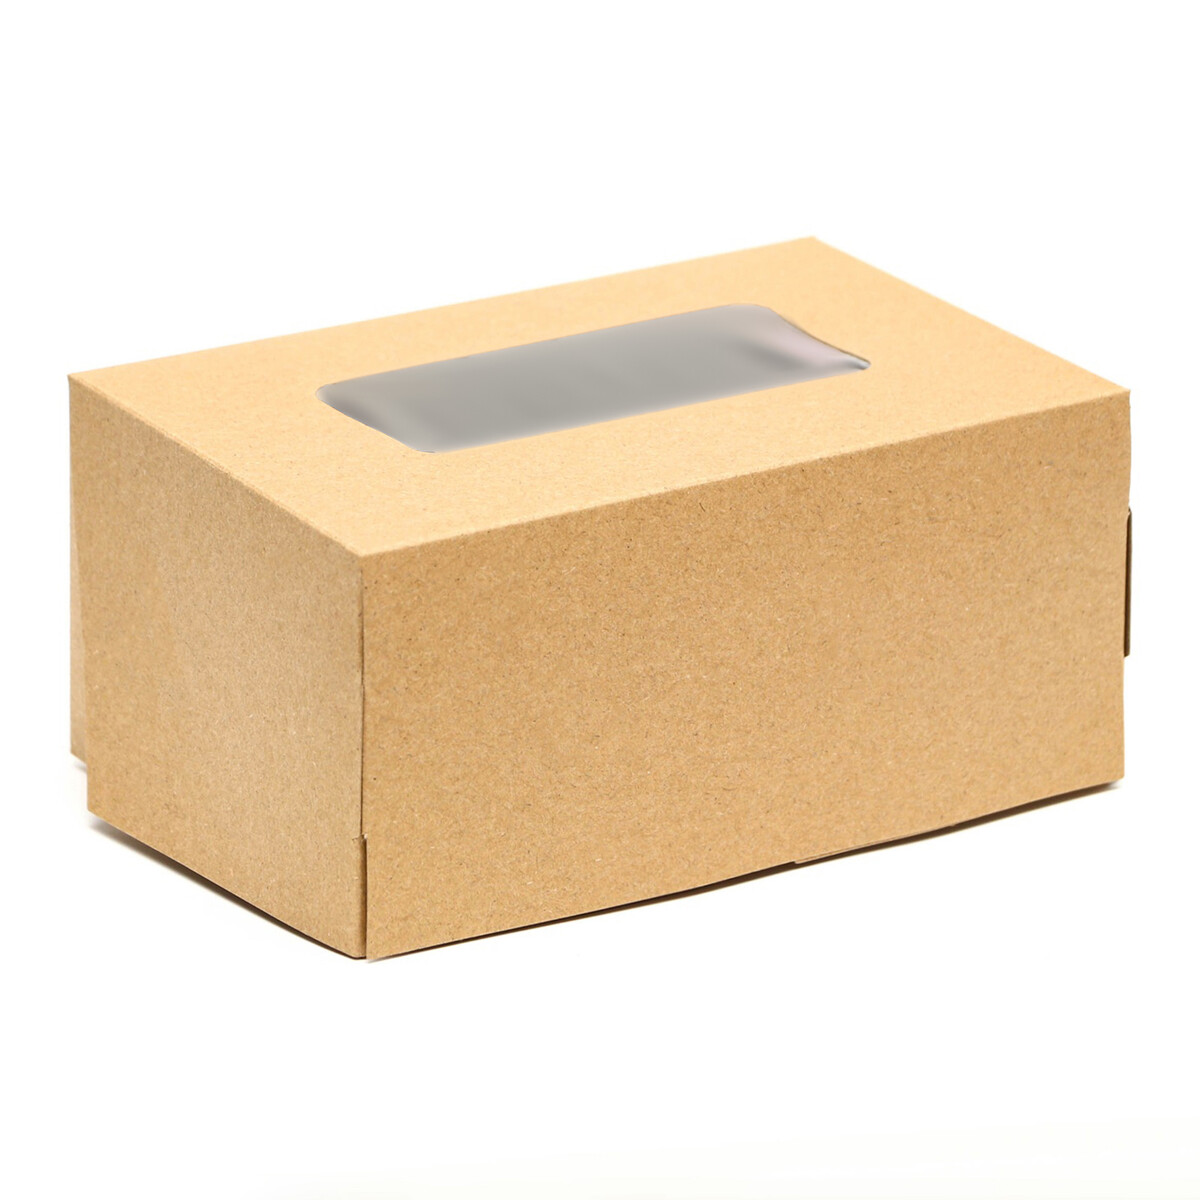 Коробка складная, с окном, крафт, 15 х 10 х 7 см, набор 10 шт. UPAK LAND